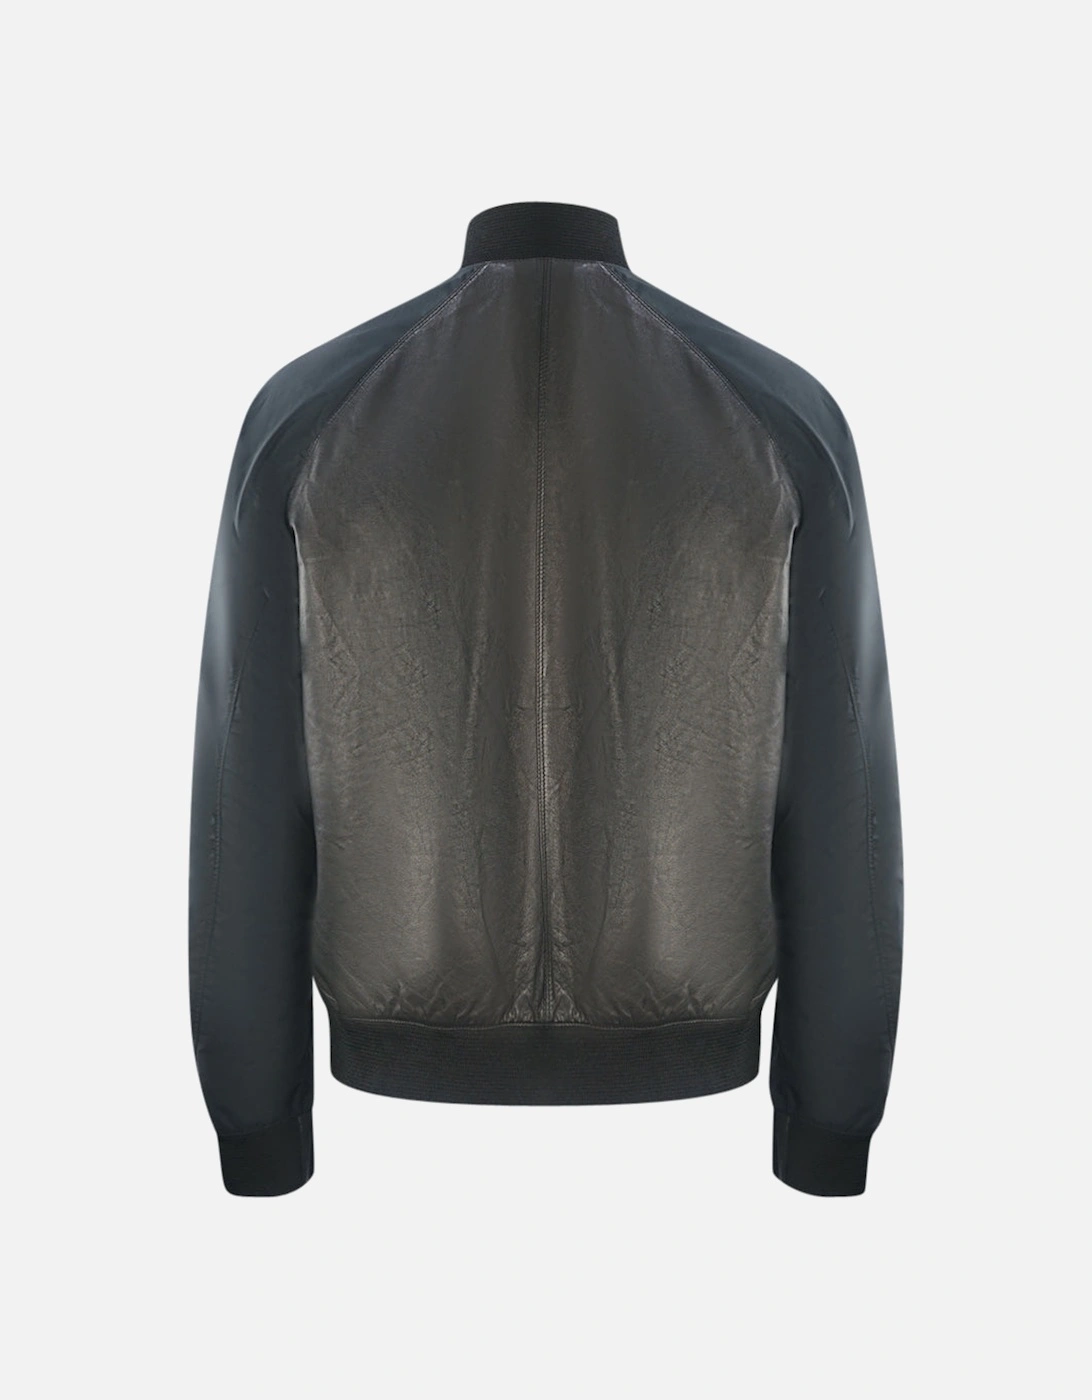 Emporio Armani Contrast Arms Black Leather Jacket